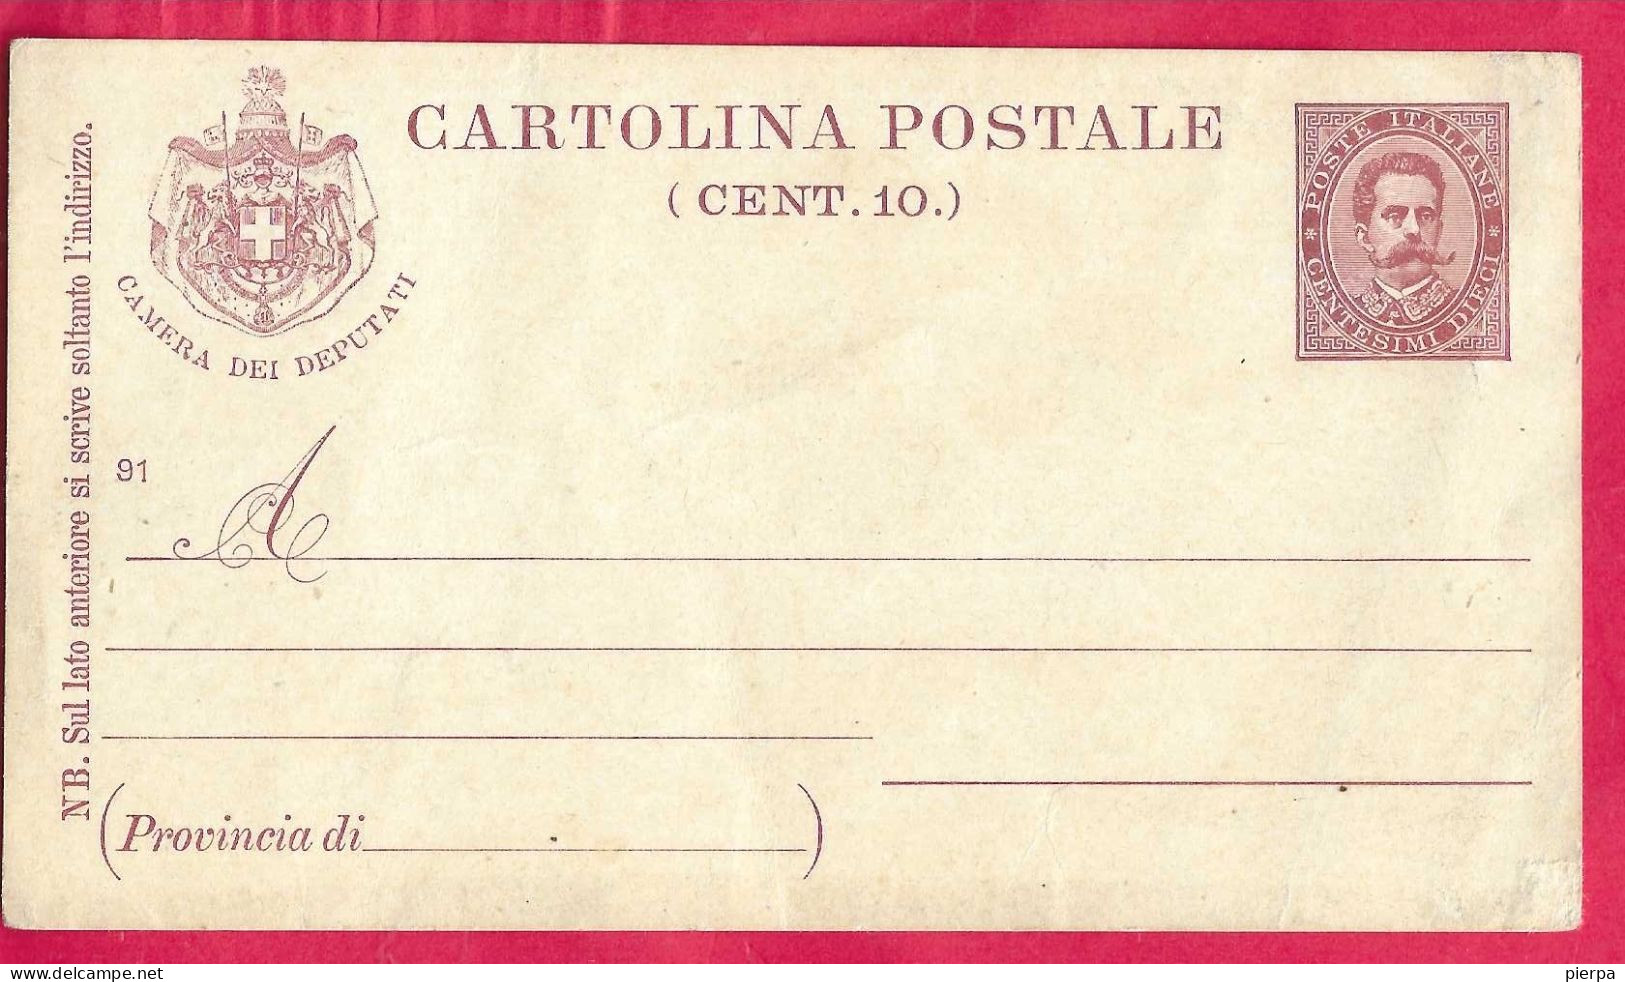 INTERO CARTOLINA POSTALE "CAMERA DEI DEPUTATI" (INT. 17B) - NUOVA - Interi Postali